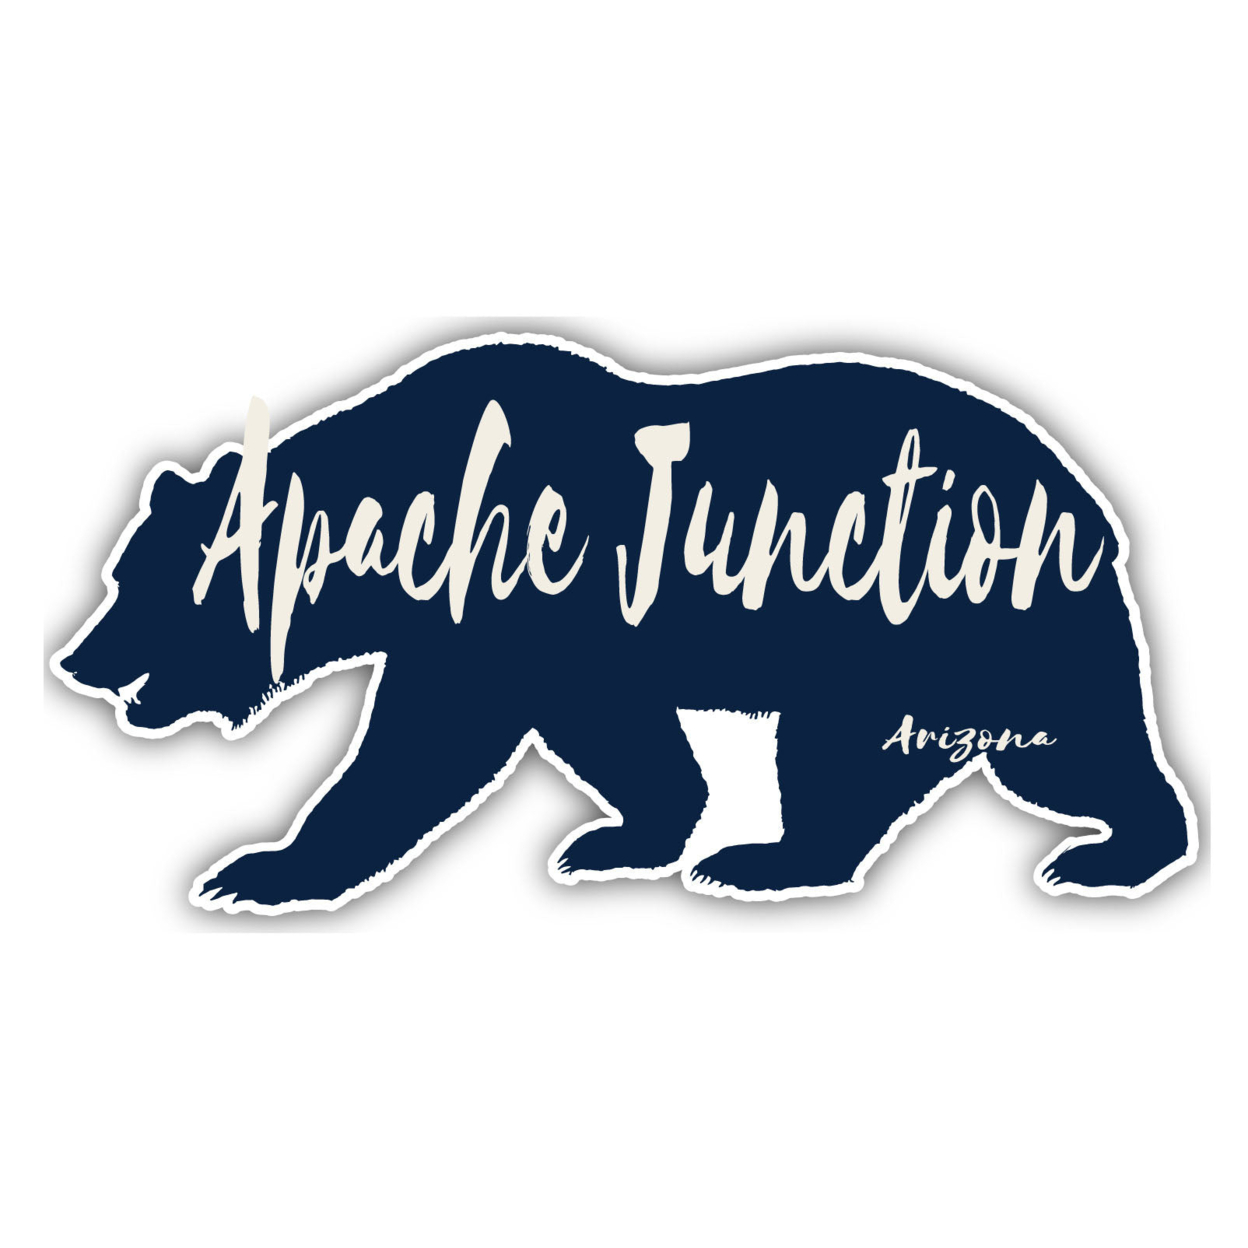 Apache Junction Arizona Souvenir Decorative Stickers (Choose Theme And Size) - 4-Pack, 4-Inch, Bear